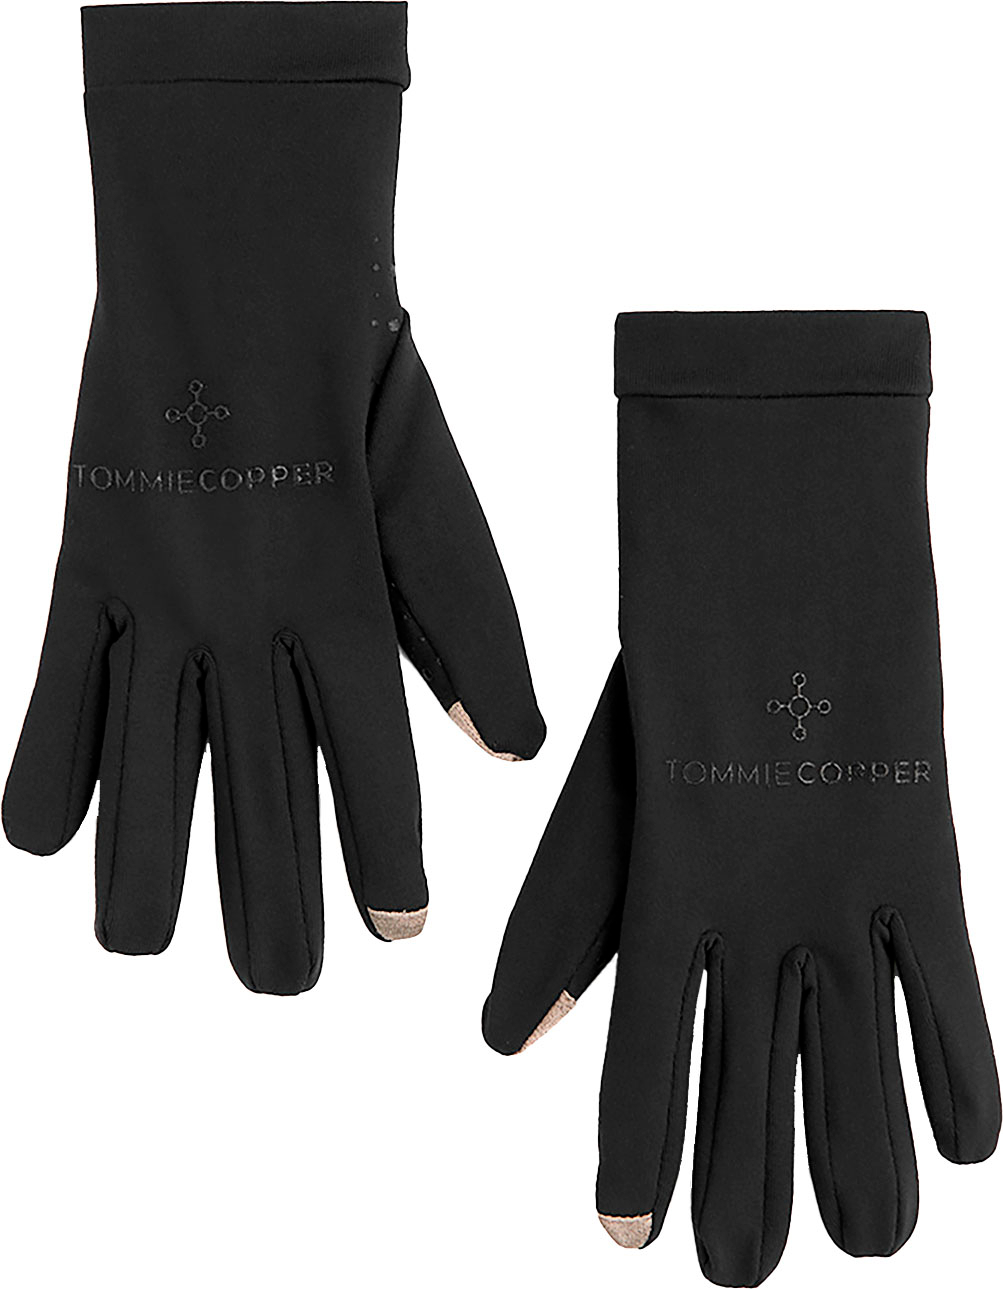 Tommie Copper Unisex Compression Infrared Full Finger Gloves Black